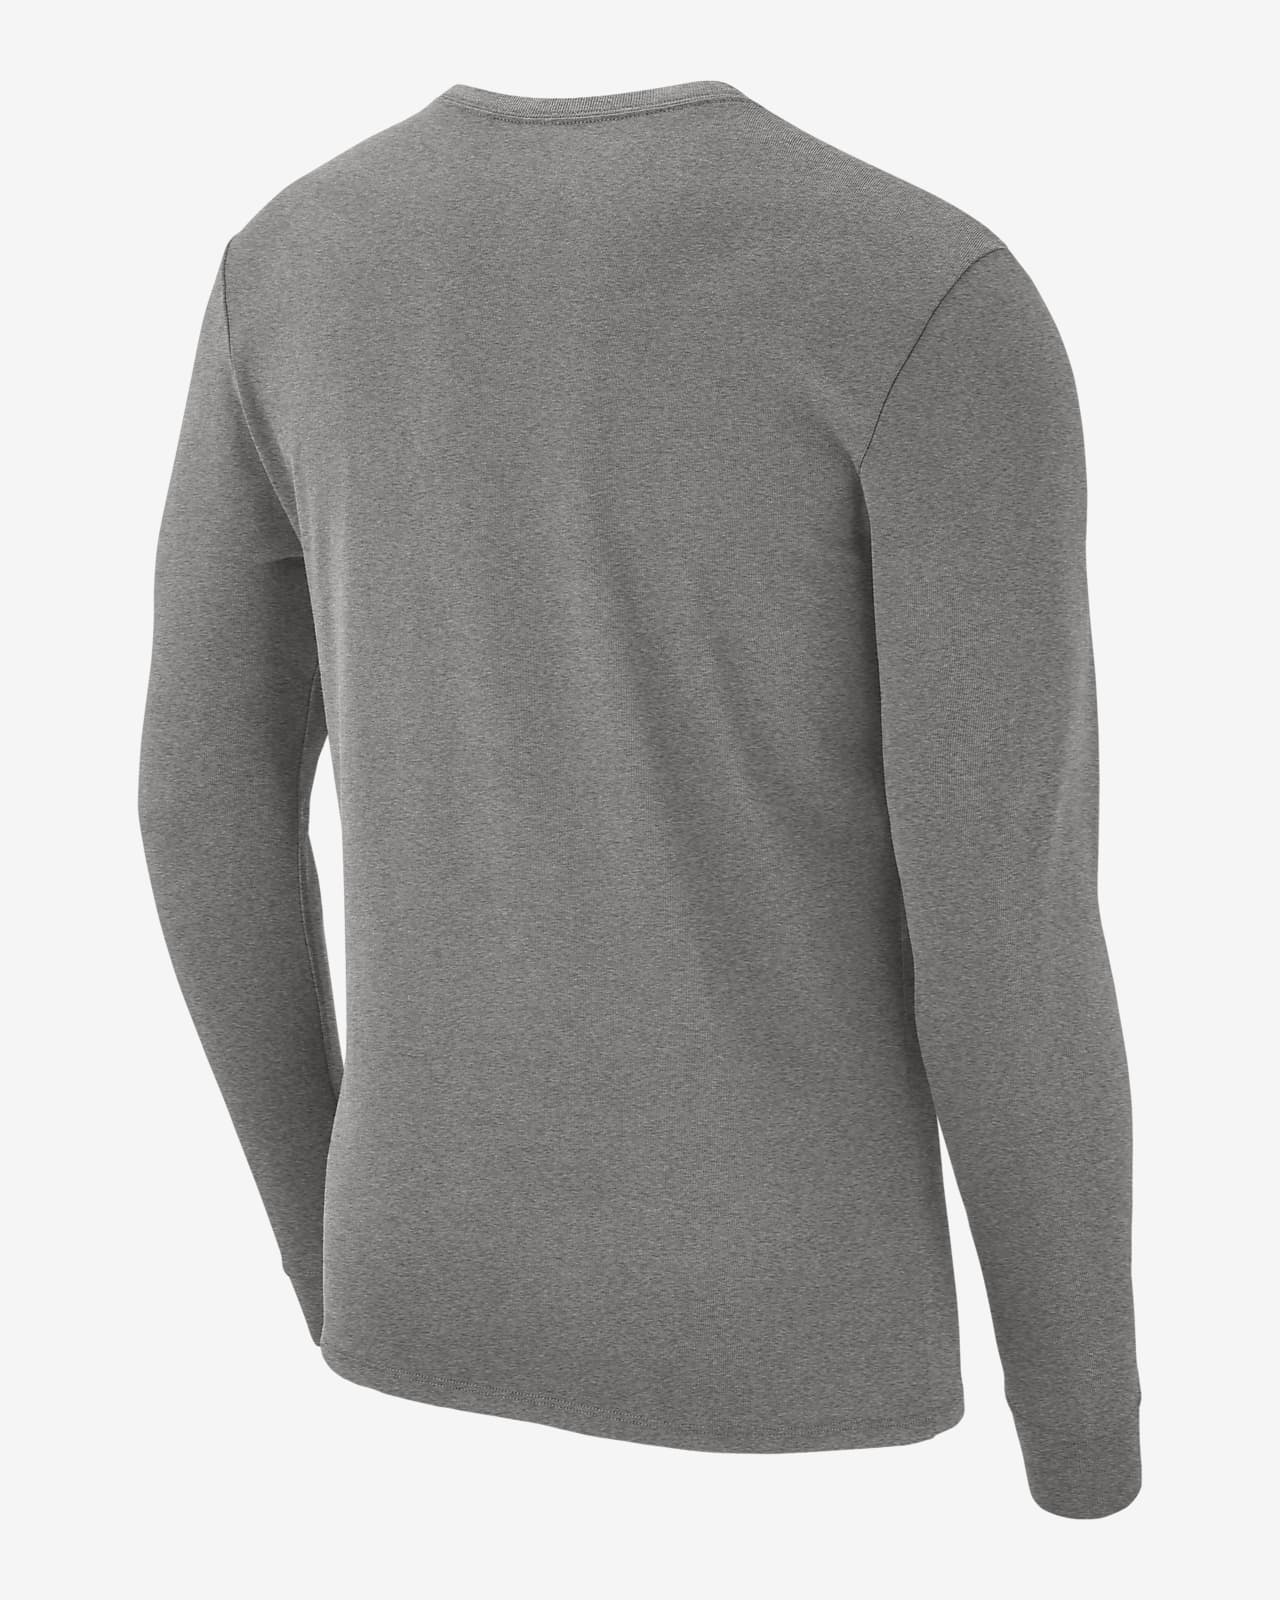 Cleveland Indians Nike Pro Long Sleeve Shirt Men's Navy New 3XL 860 -  Locker Room Direct